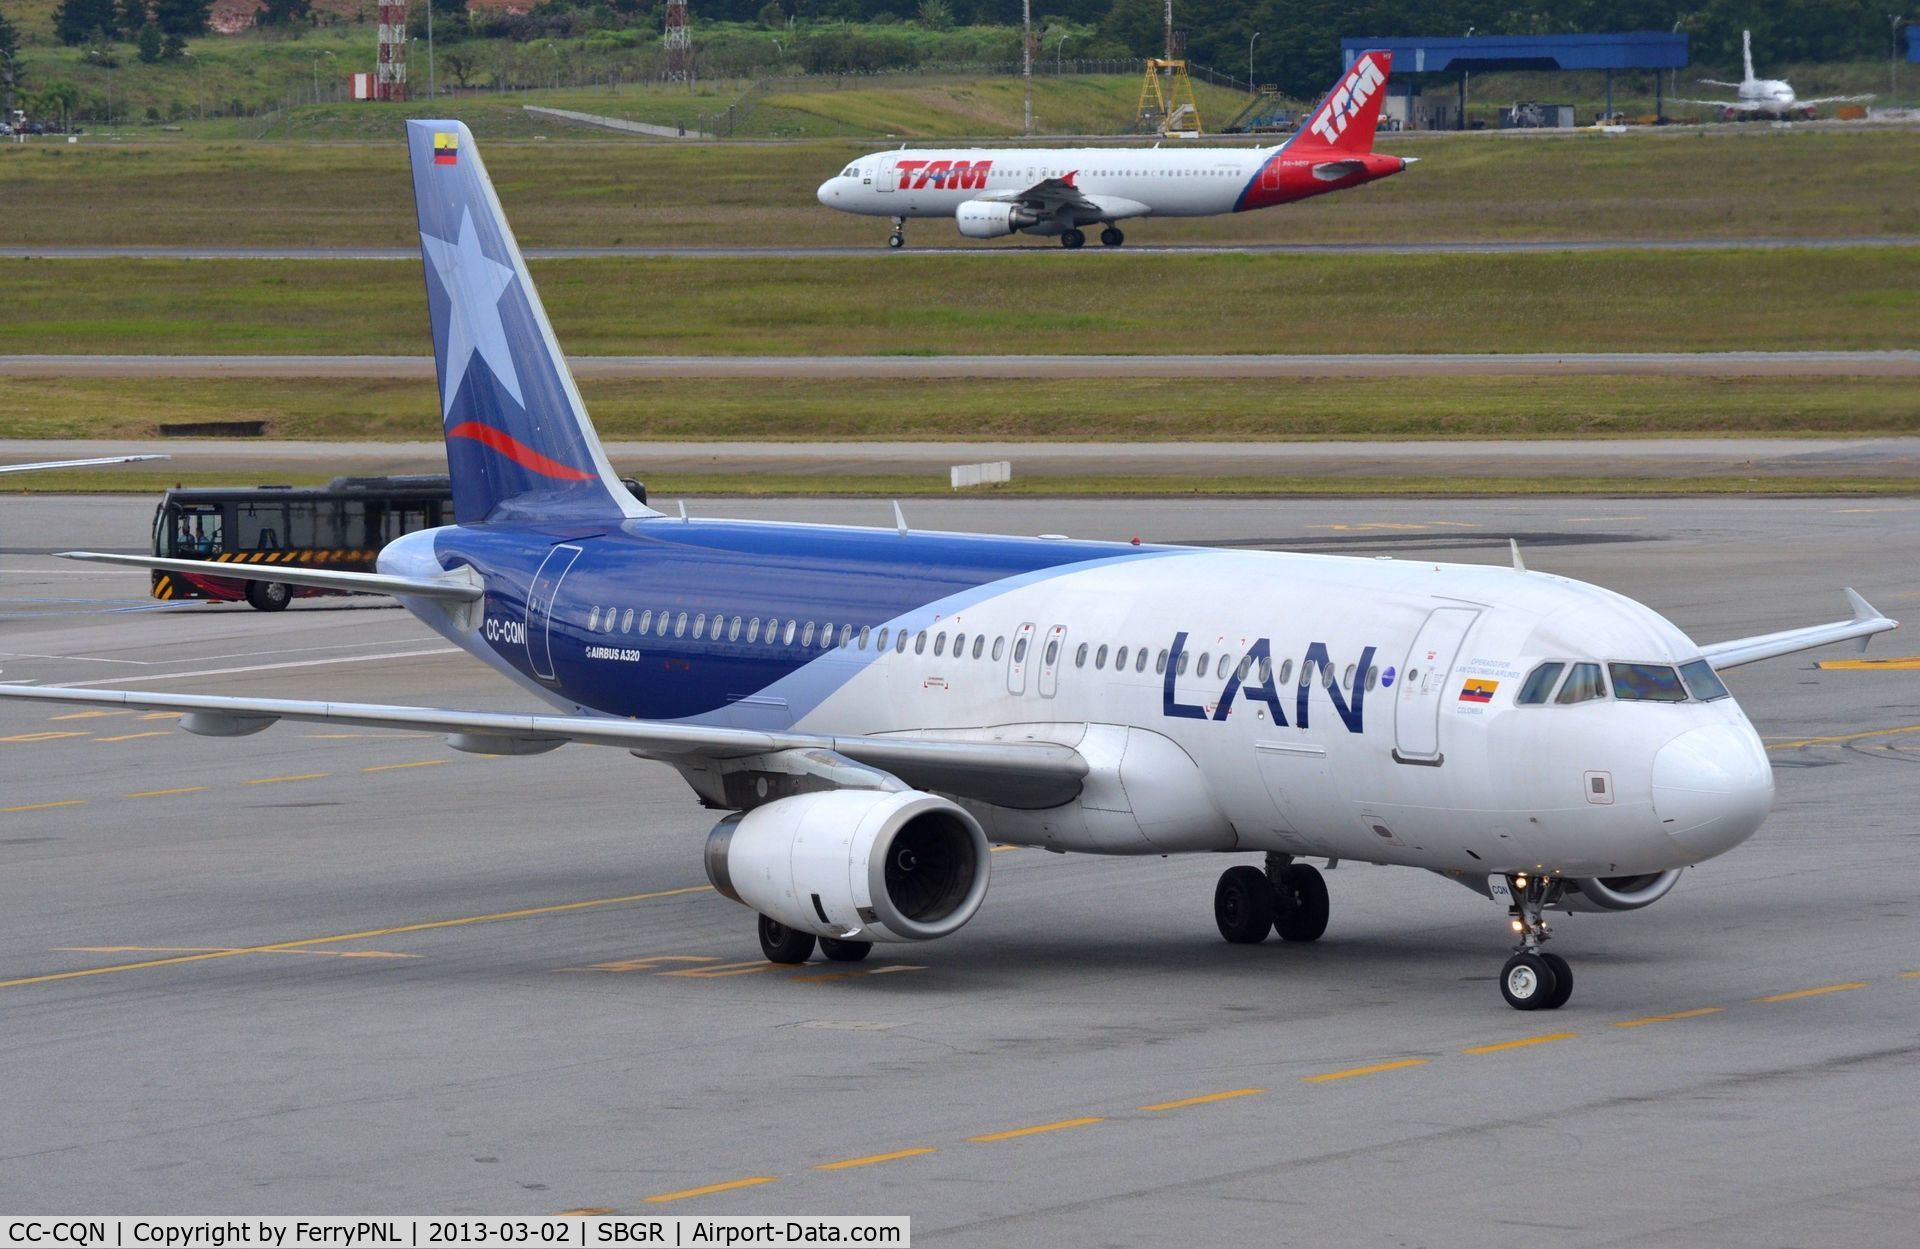 CC-CQN, 2007 Airbus A320-233 C/N 3319, LAN Colombia A320 in GRU